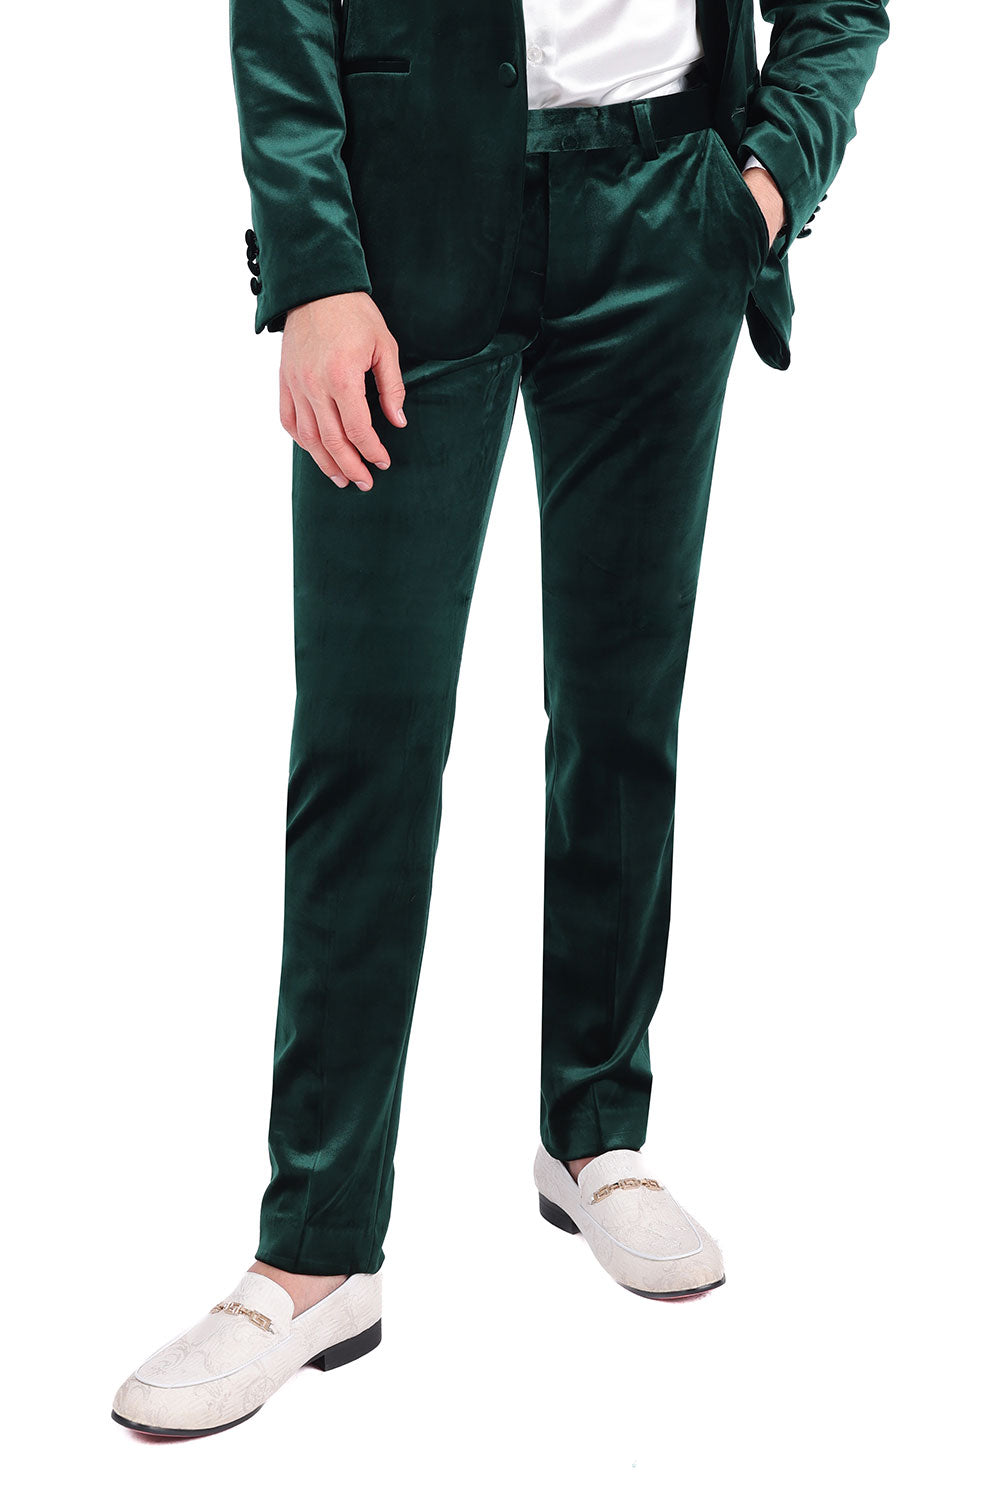 Barabas Men's Velvet Shiny Chino Solid Color Dress Pants 3CP06 Green